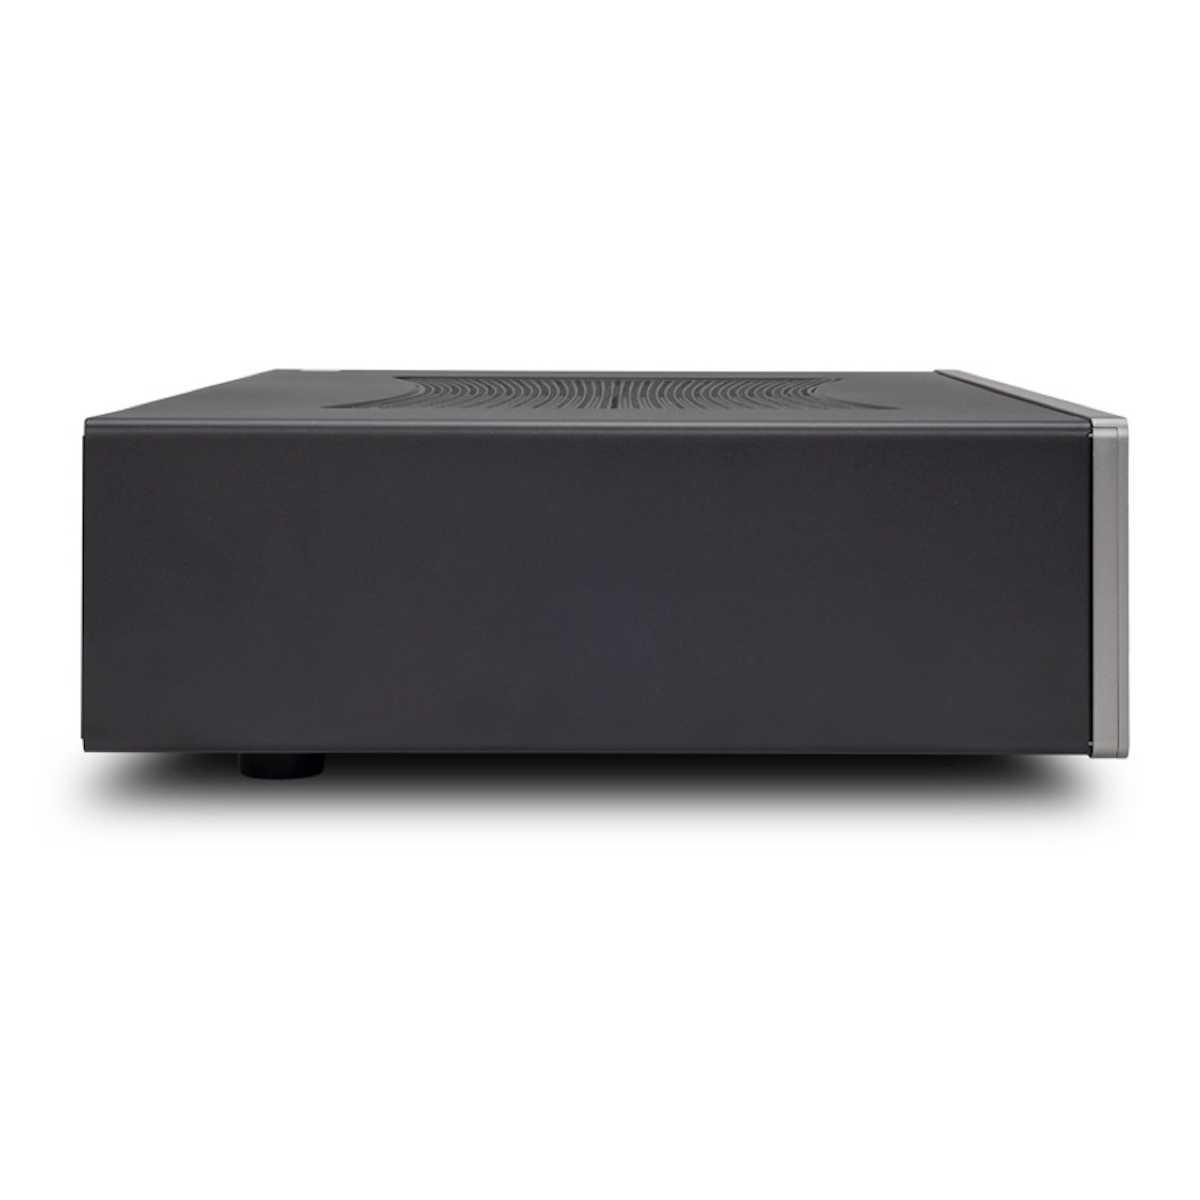 Cambridge Audio CXA81 (Black) Stereo integrated amplifier with